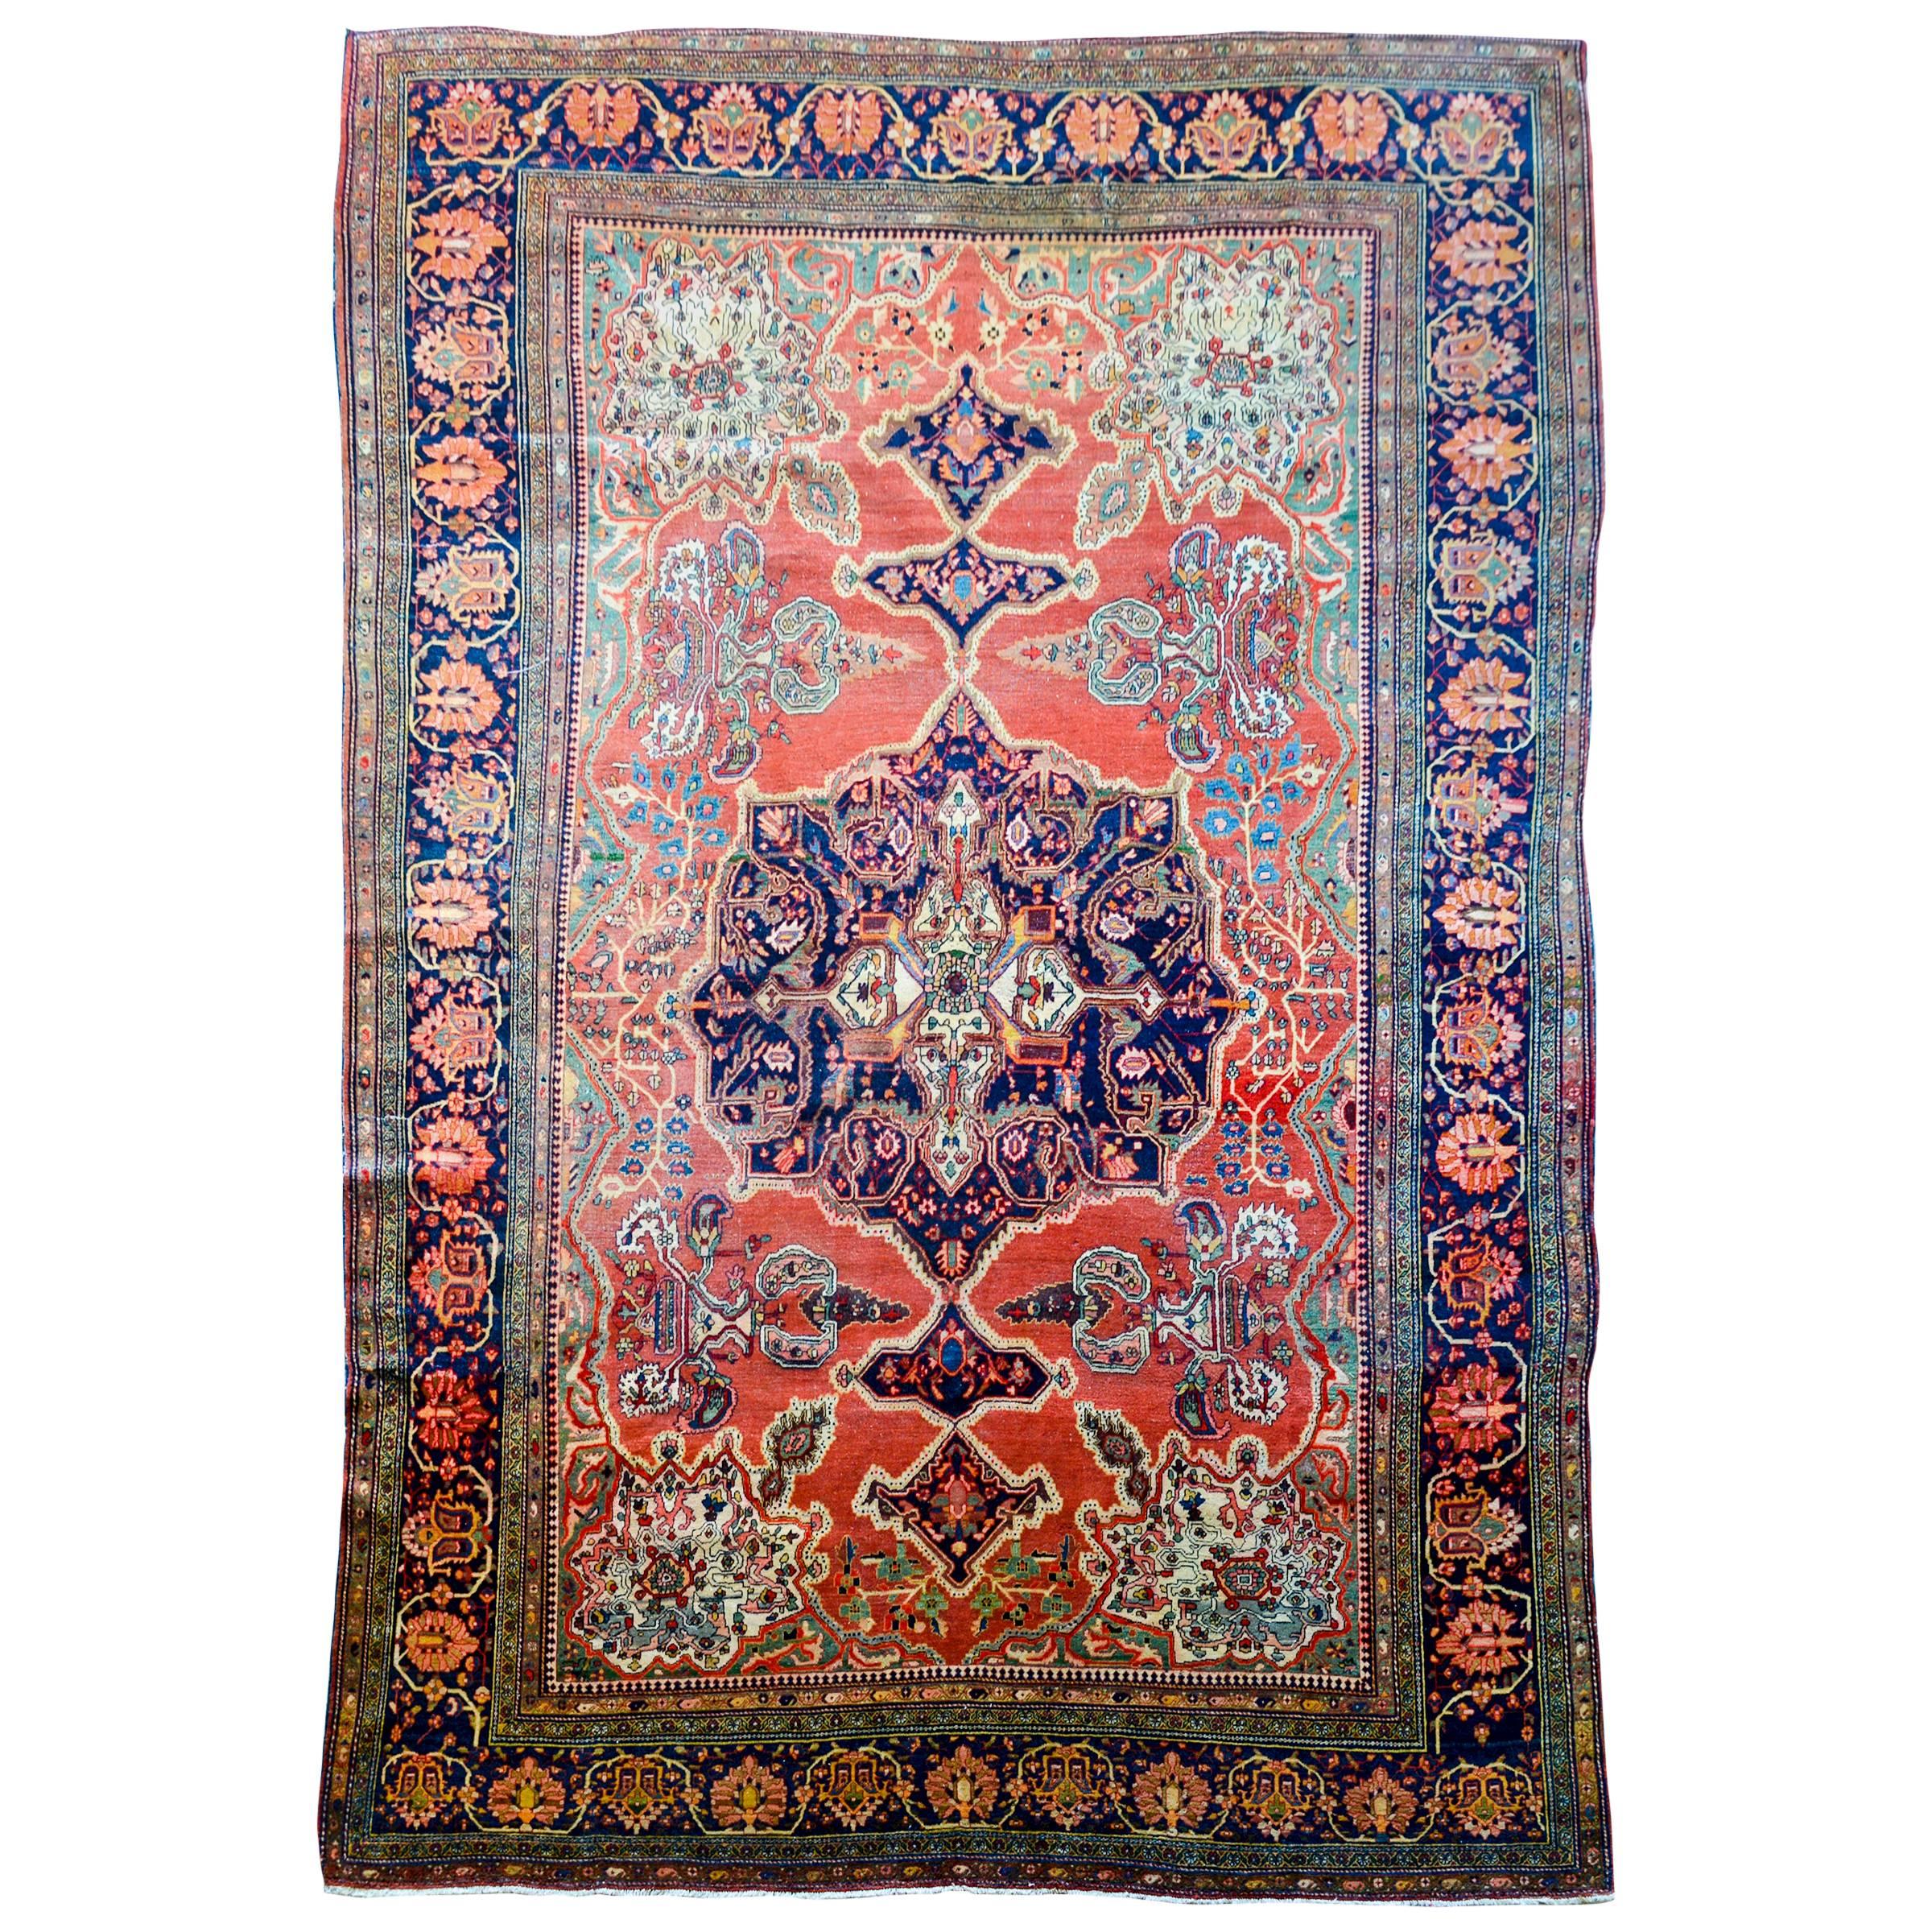 Incroyable tapis Farahan Sarouk du 19ème siècle